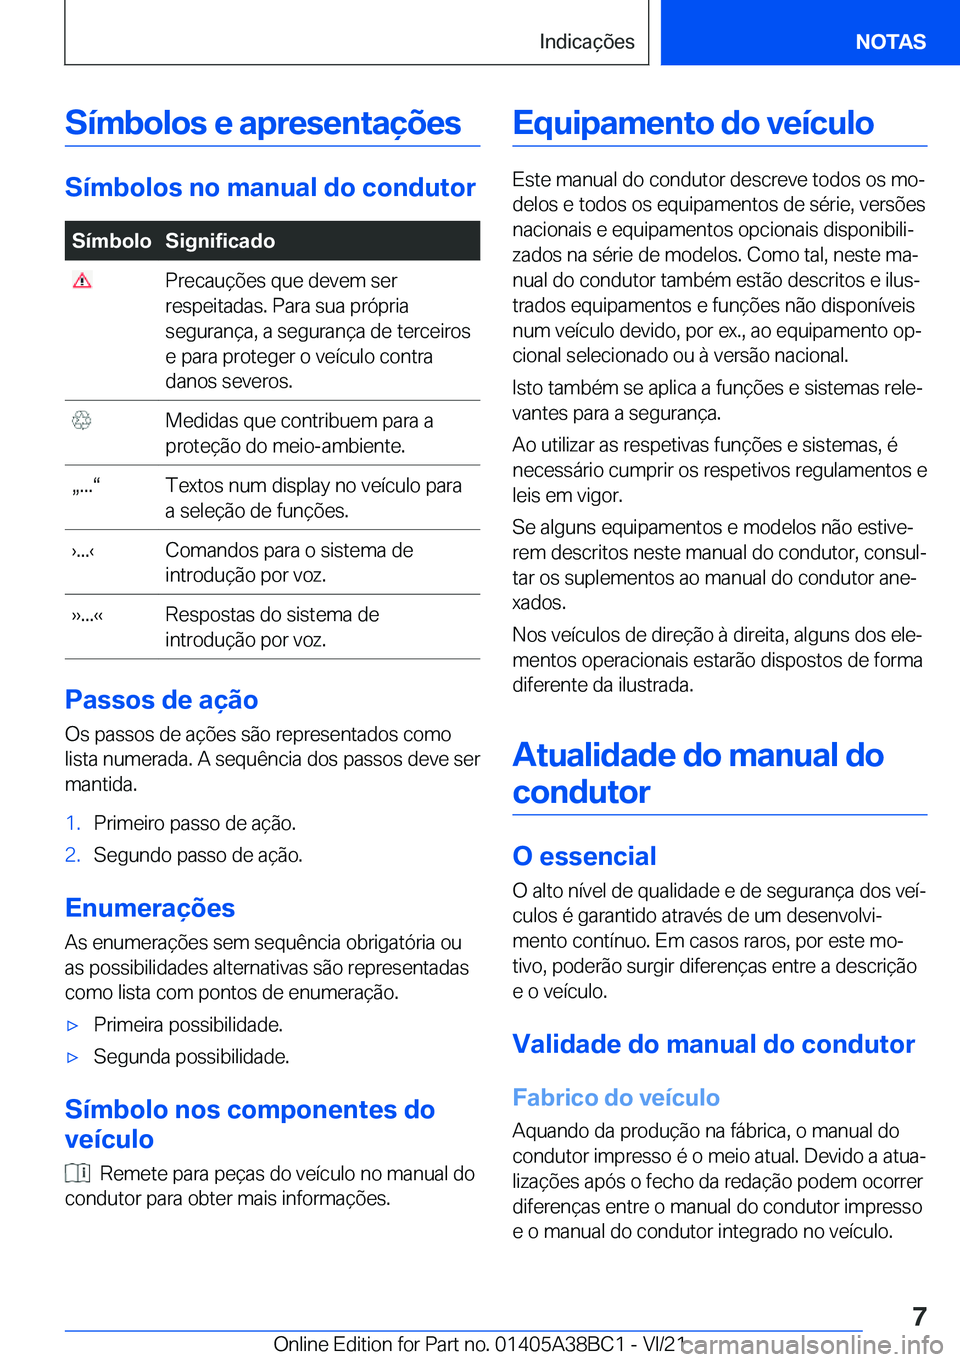 BMW M4 2022  Manual do condutor (in Portuguese) �S�